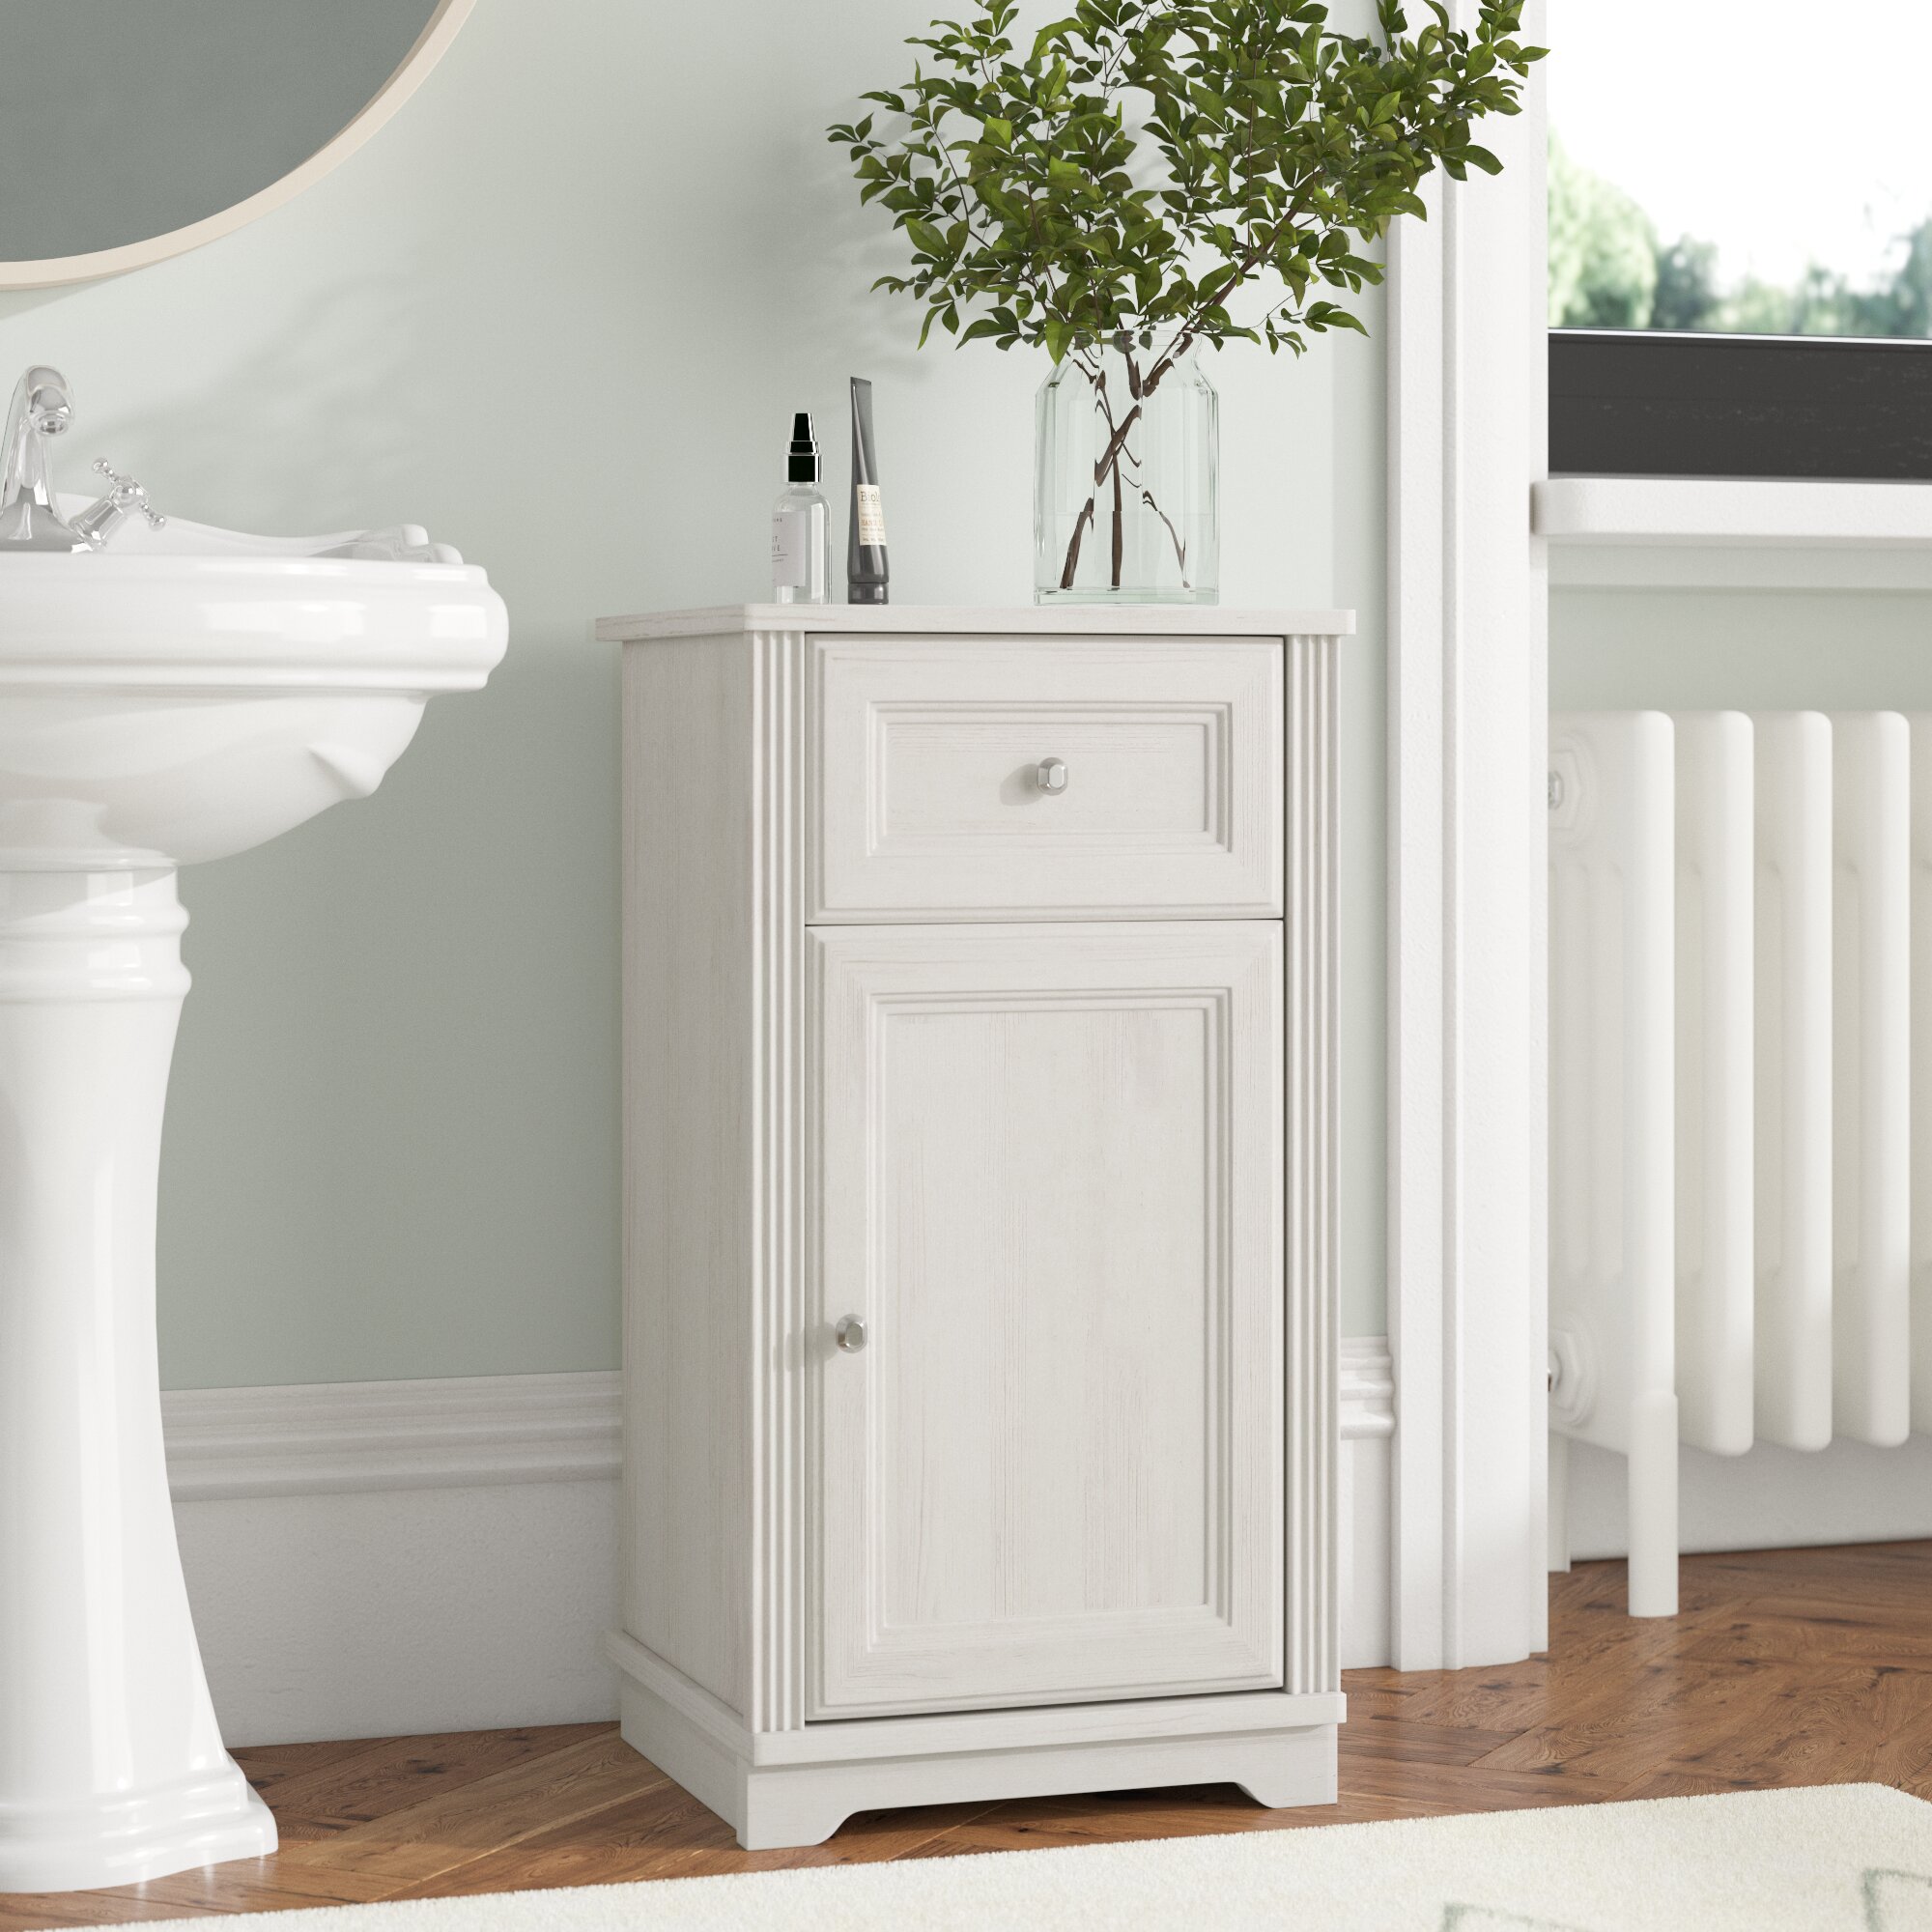 Belfry Bathroom Palace 43cm X 81 Cm Freestanding Cabinet Reviews